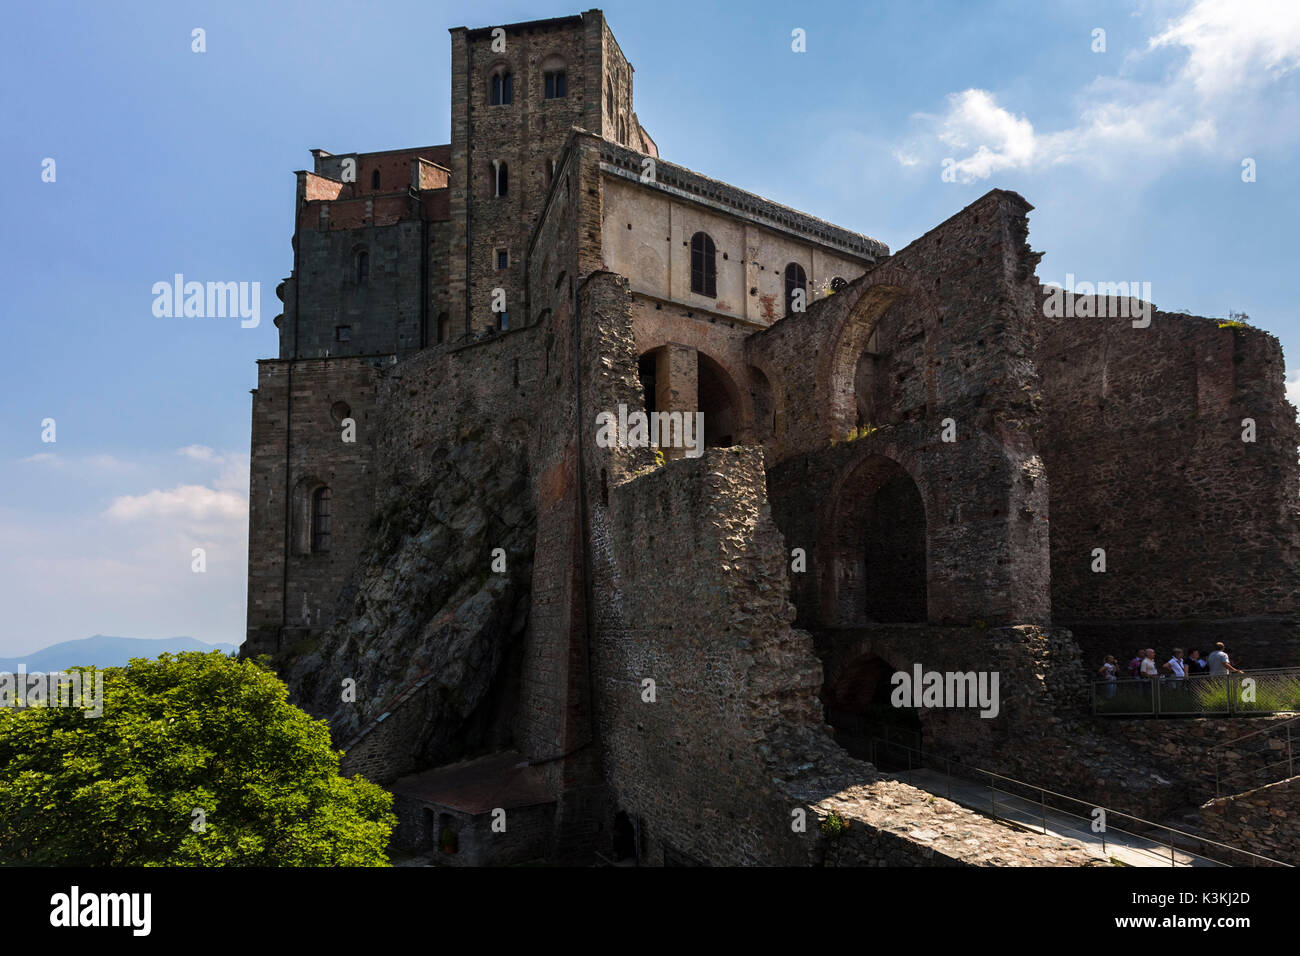 View of the Sacra di San Michele from the ruins of the New Monastery. Sacra di San Michele, Sant'Ambrogio di Torino, Val di Susa, Torino district, Piedmont, Italy. Stock Photo